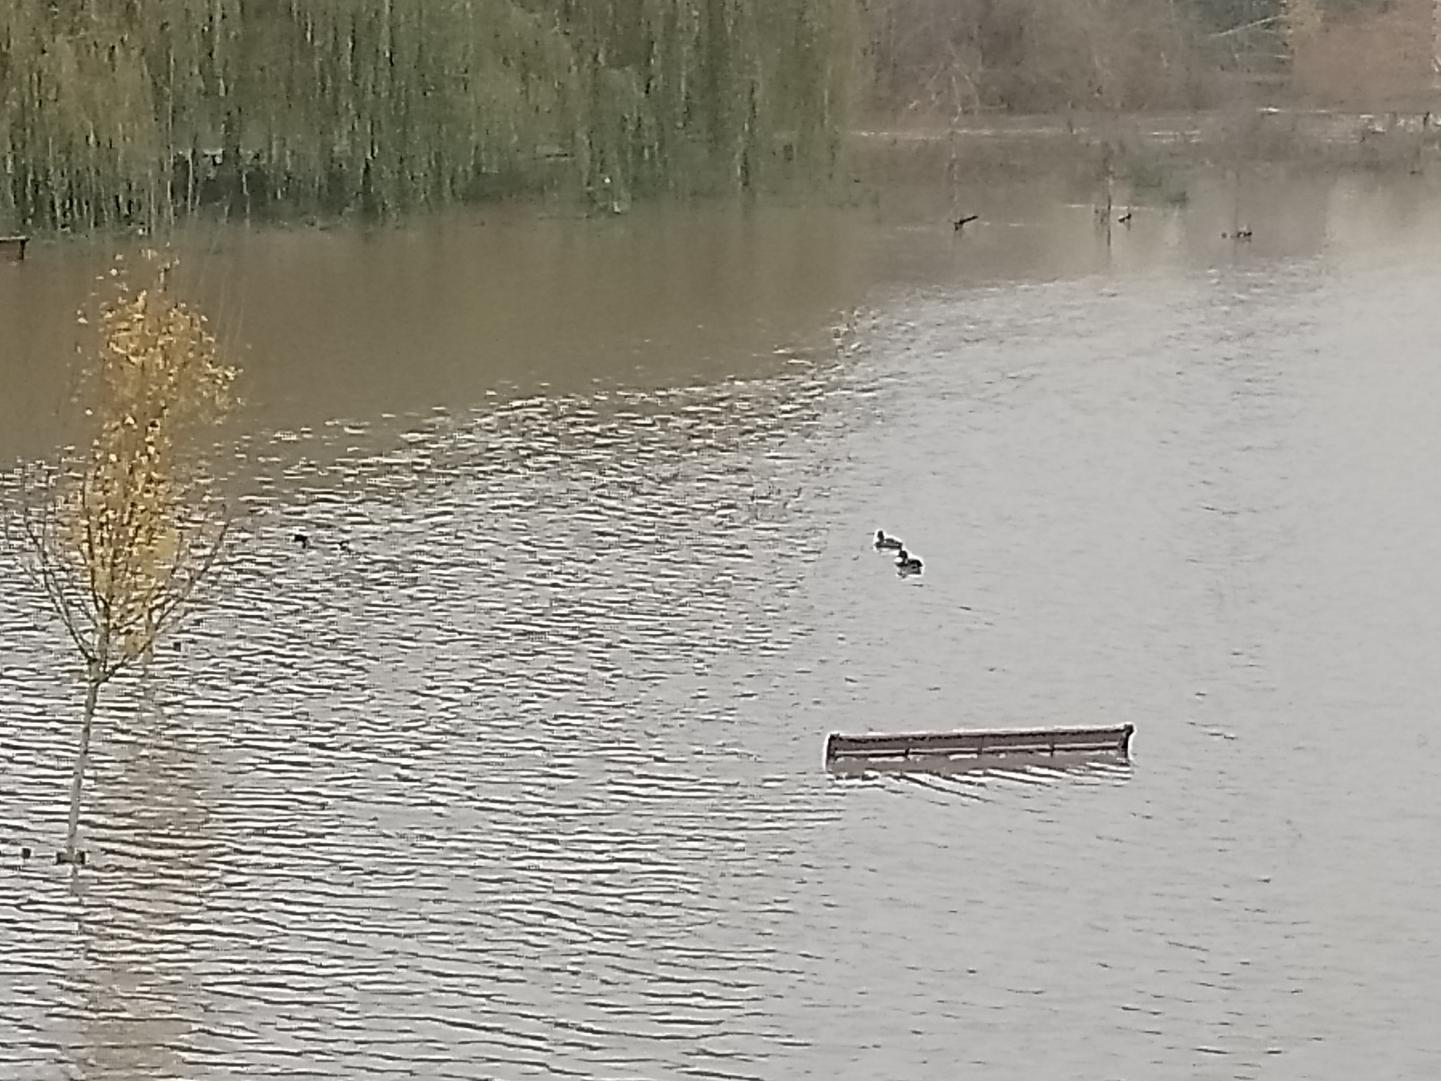 The flood plain near Portobello Bridge in Warwick